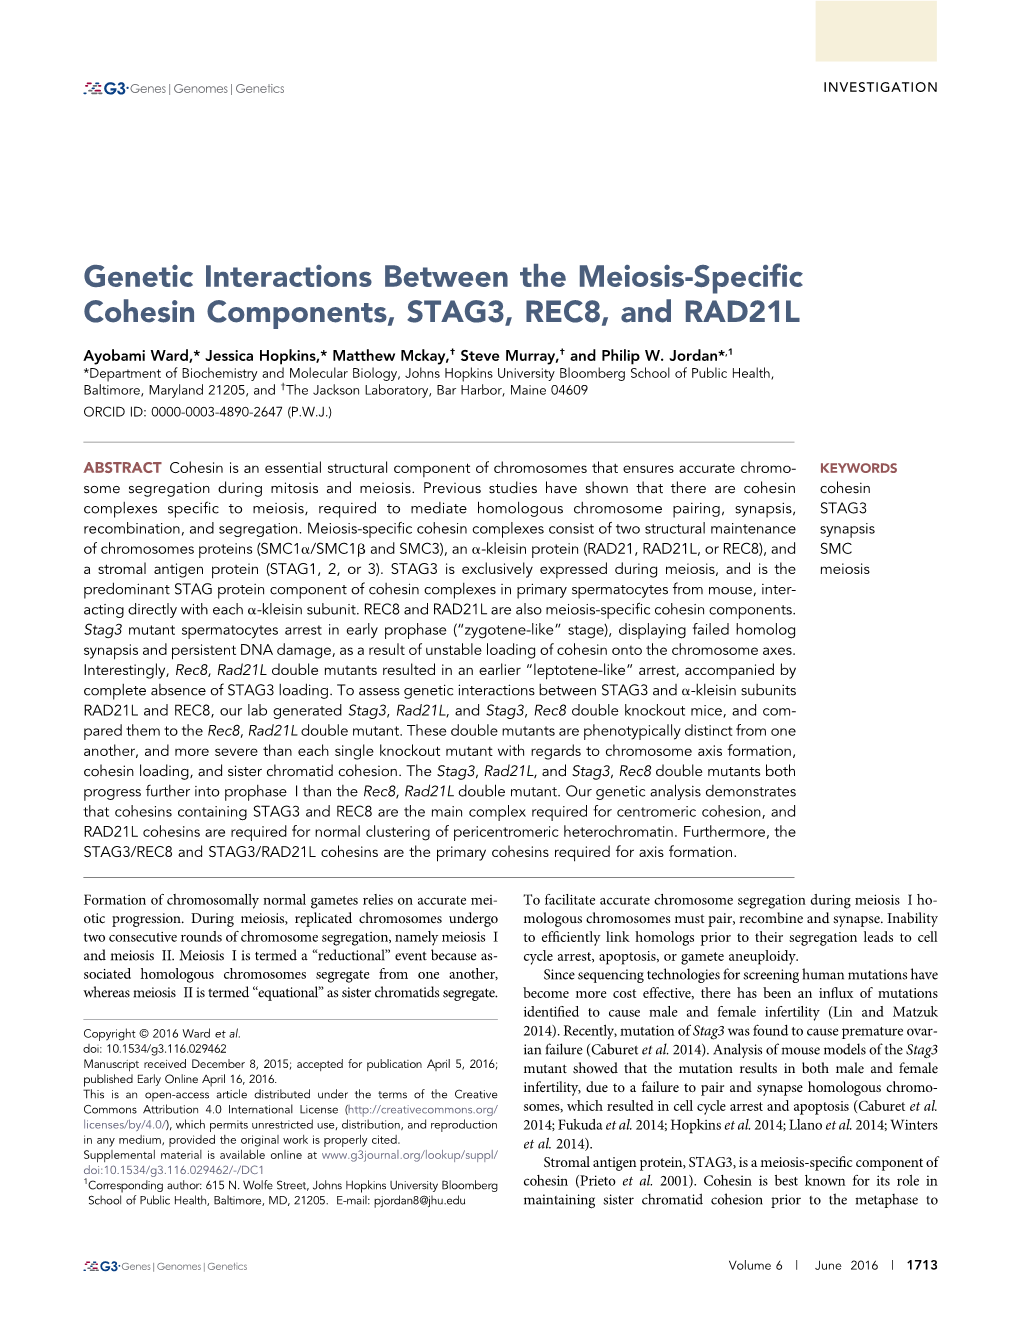 Genetic Interactions Between the Meiosis-Specific Cohesin